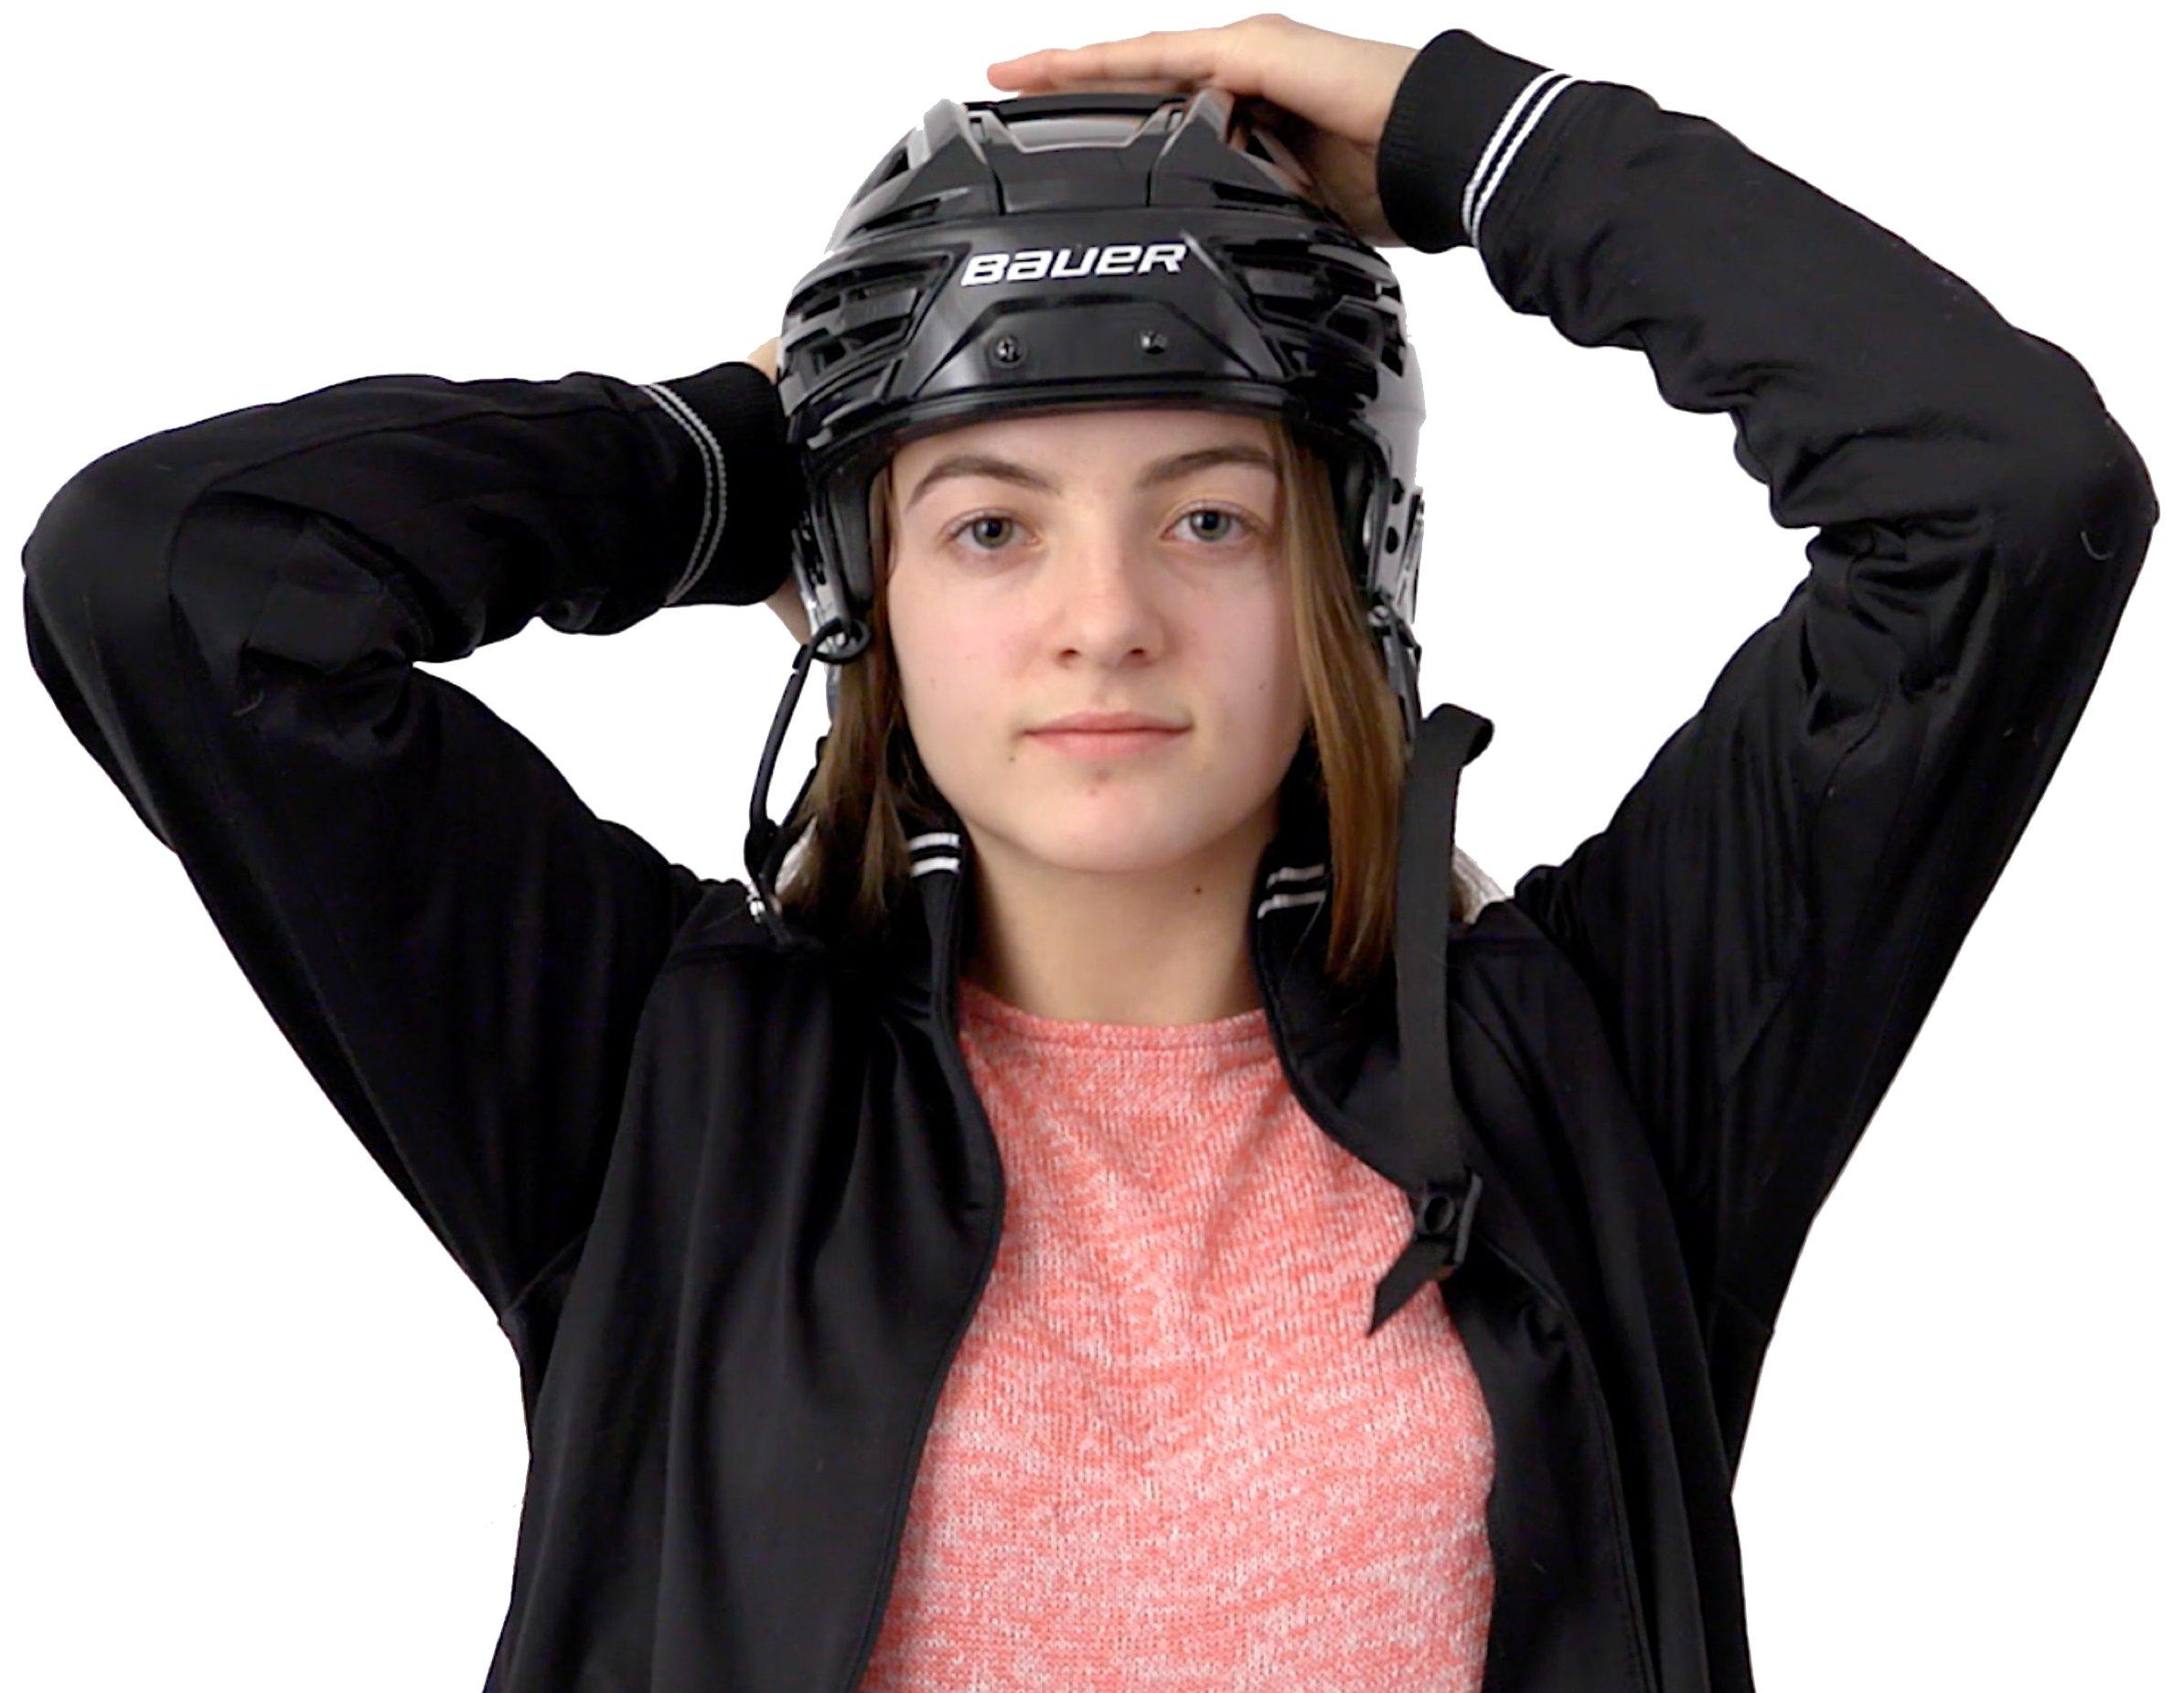 Girl wearing helmet